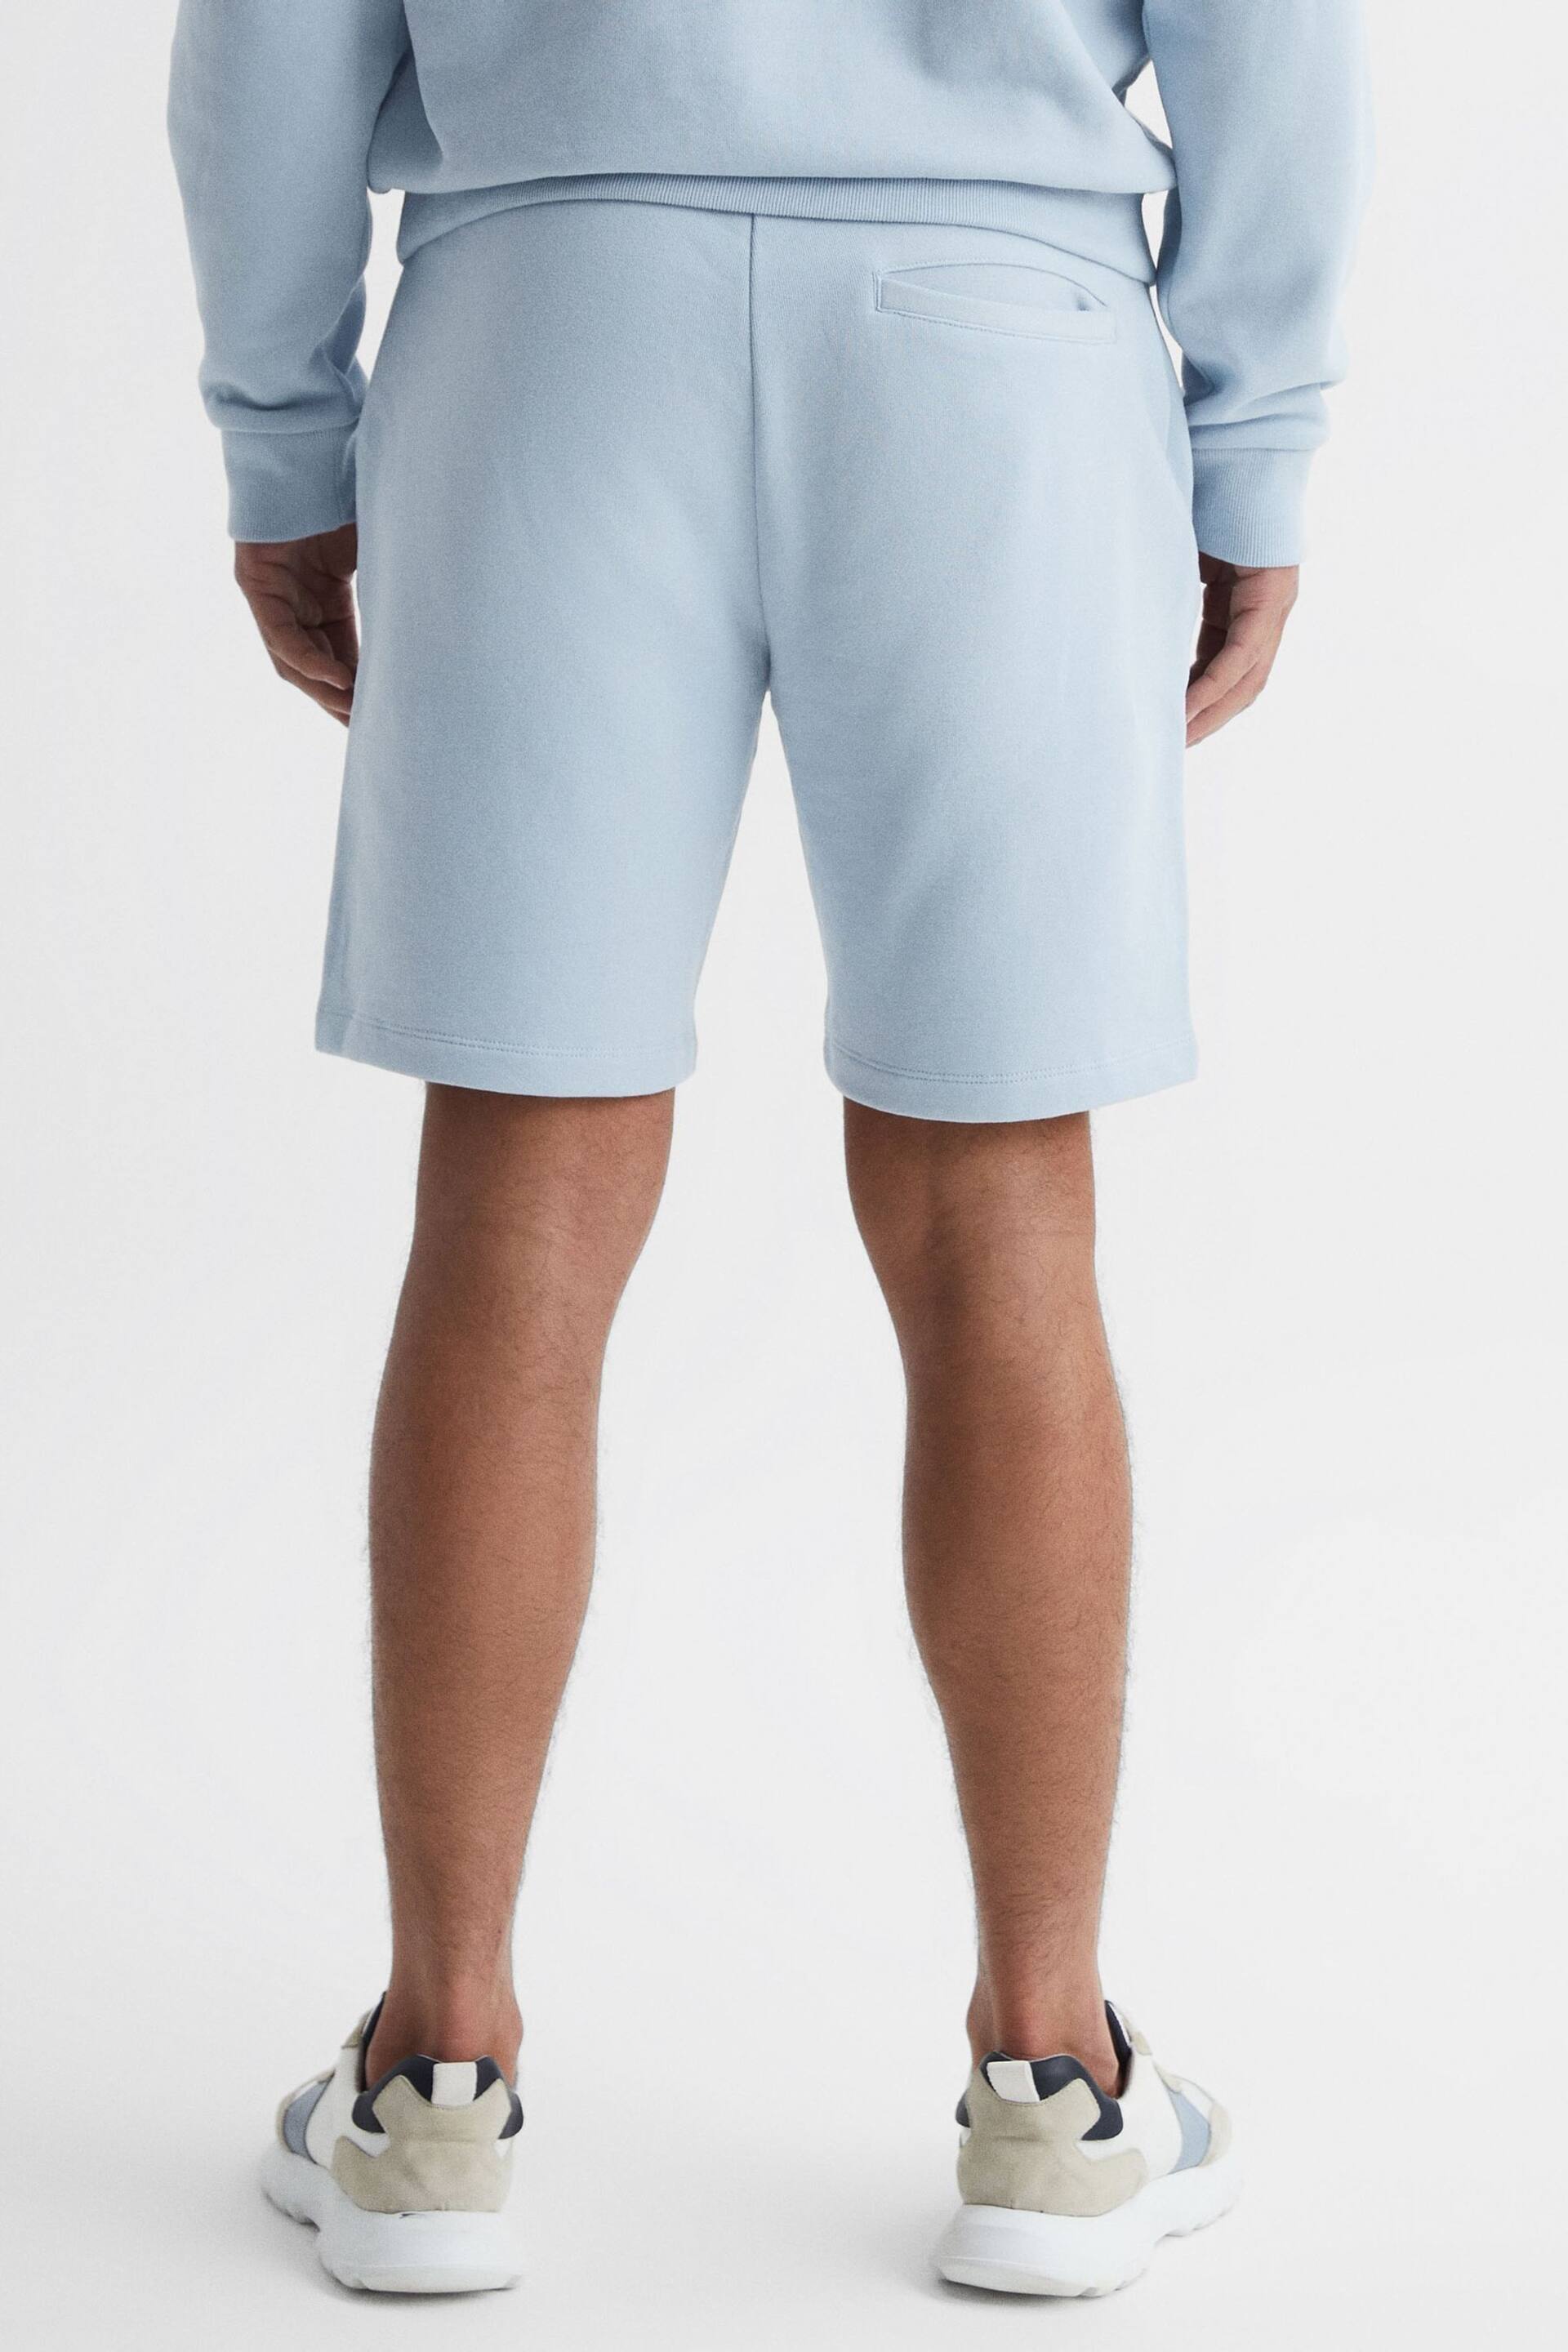 Reiss Ice Blue Henry Garment Dye Jersey Shorts - Image 5 of 5